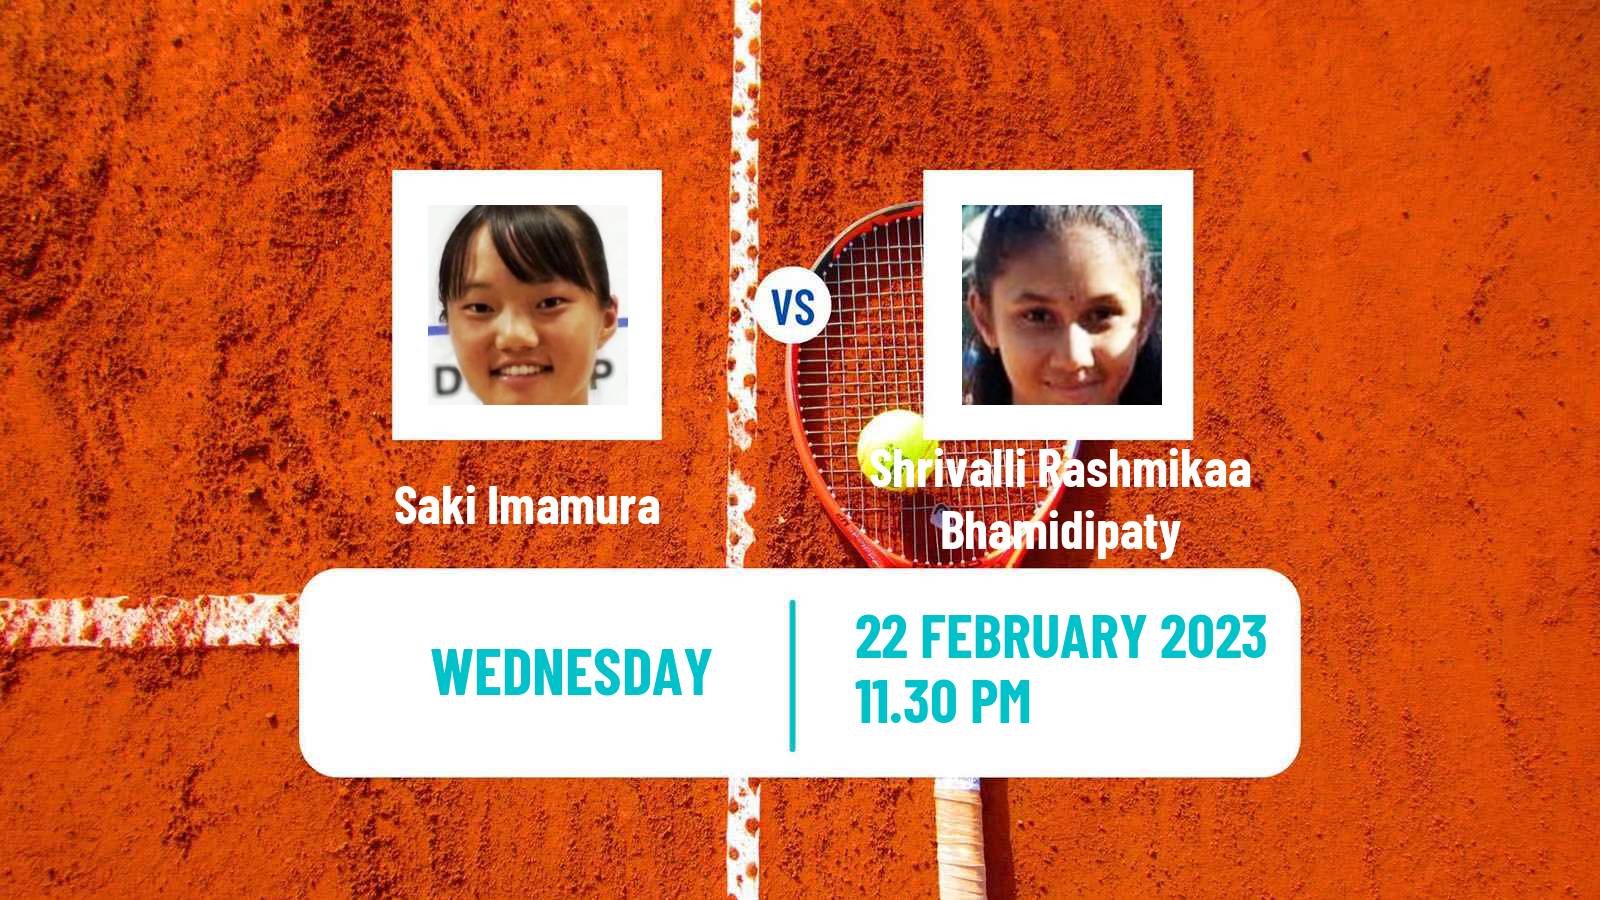 Tennis ITF Tournaments Saki Imamura - Shrivalli Rashmikaa Bhamidipaty